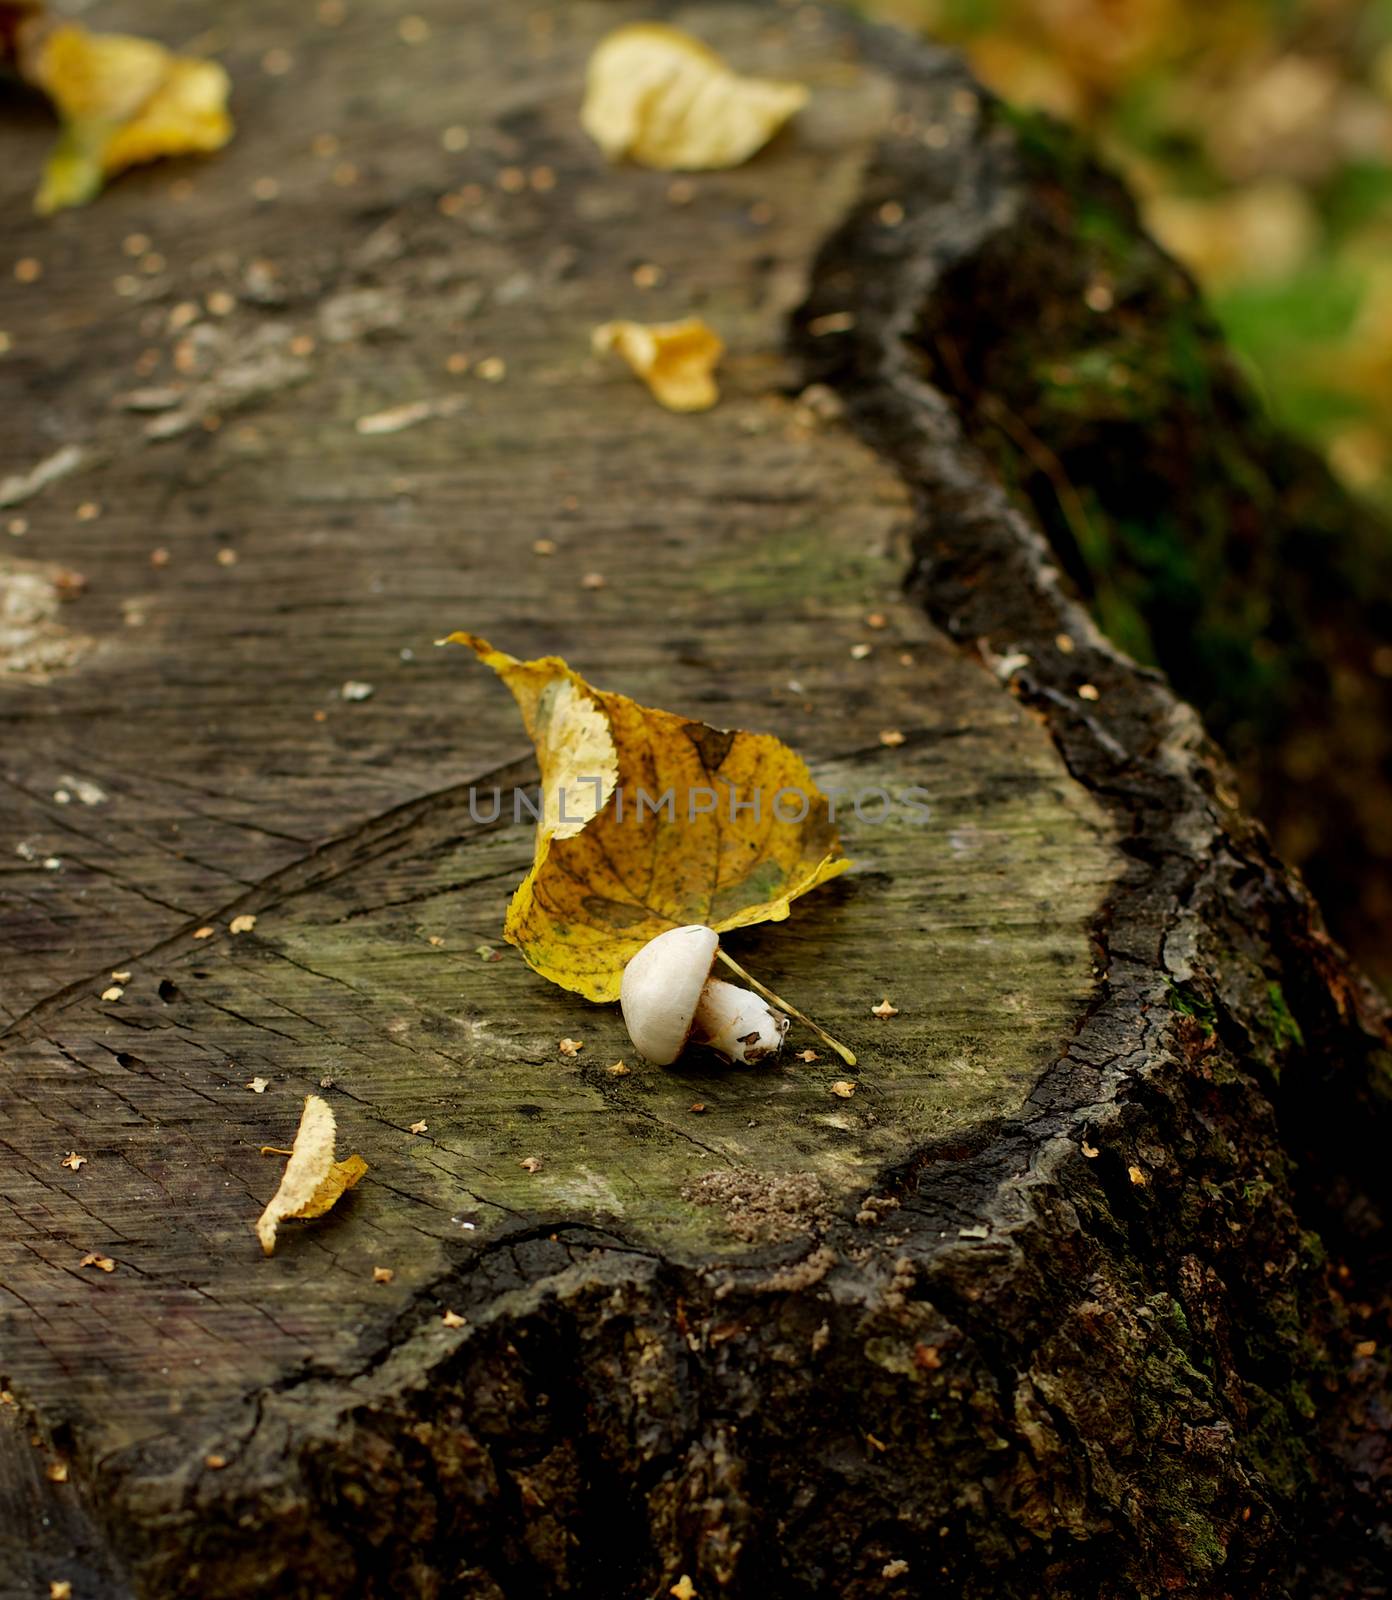 Mushroom on Tree Stump by zhekos